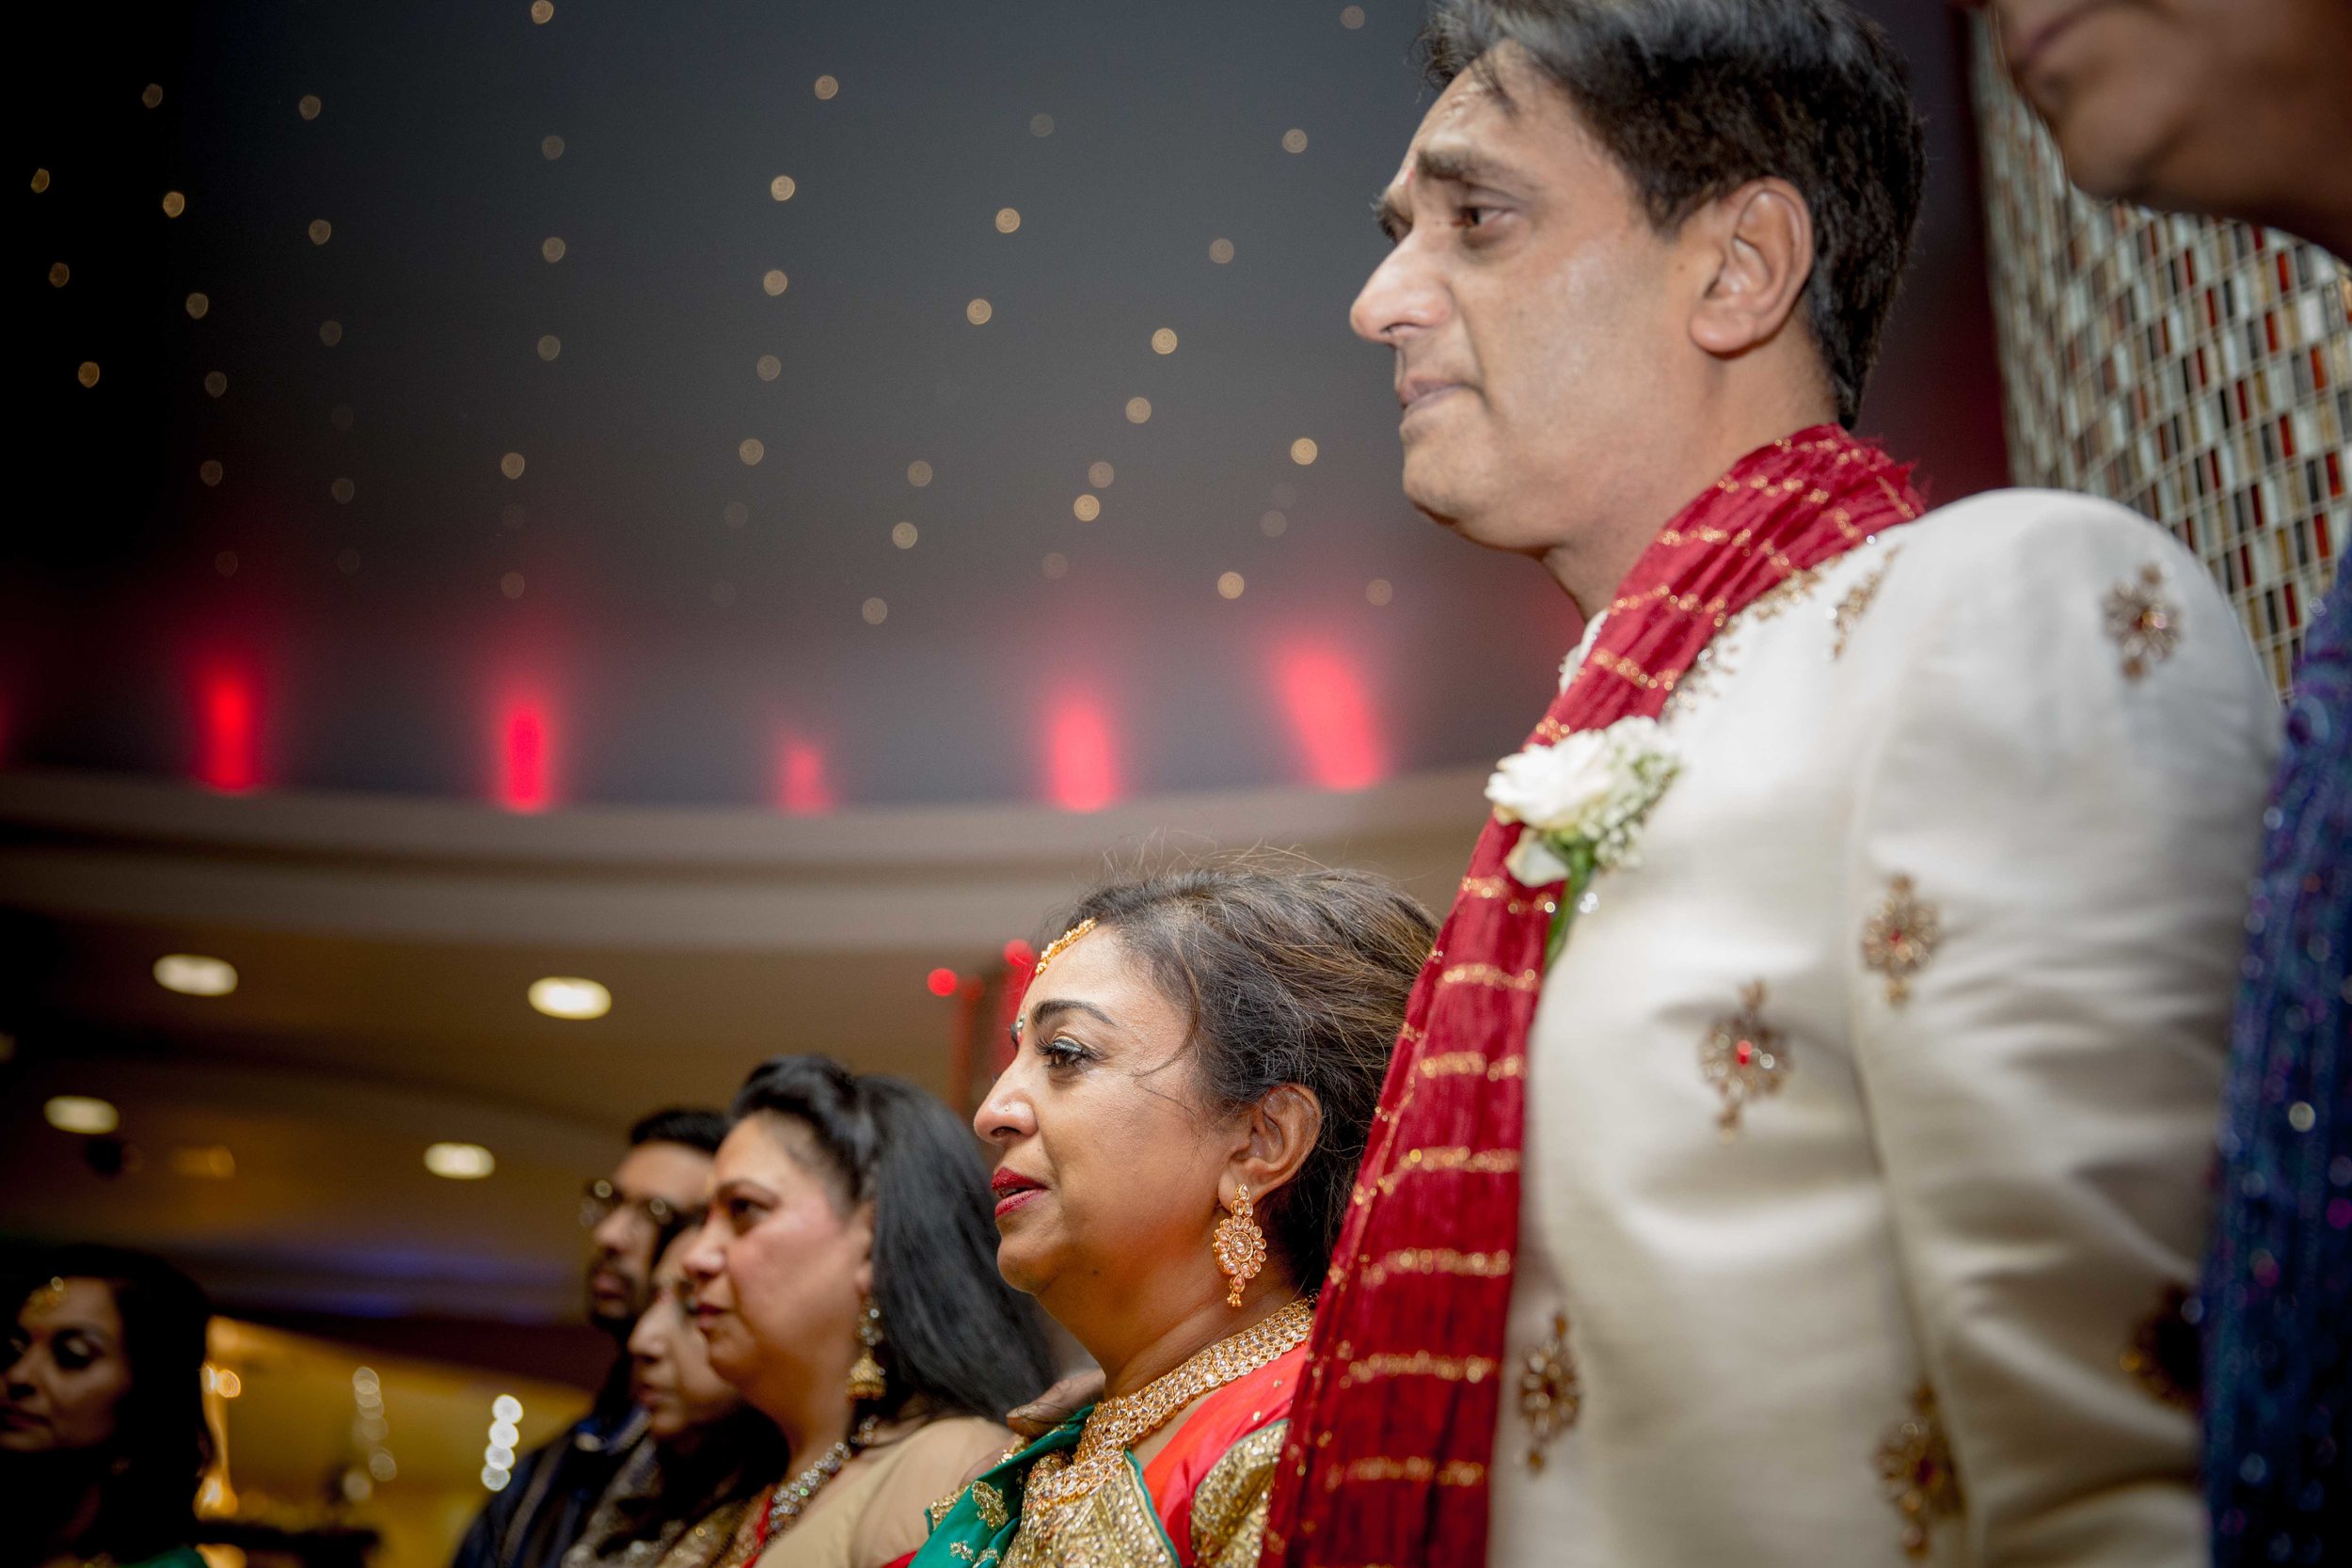 premier-banquetting-london-Hindu-asian-wedding-photographer-natalia-smith-photography-44.jpg